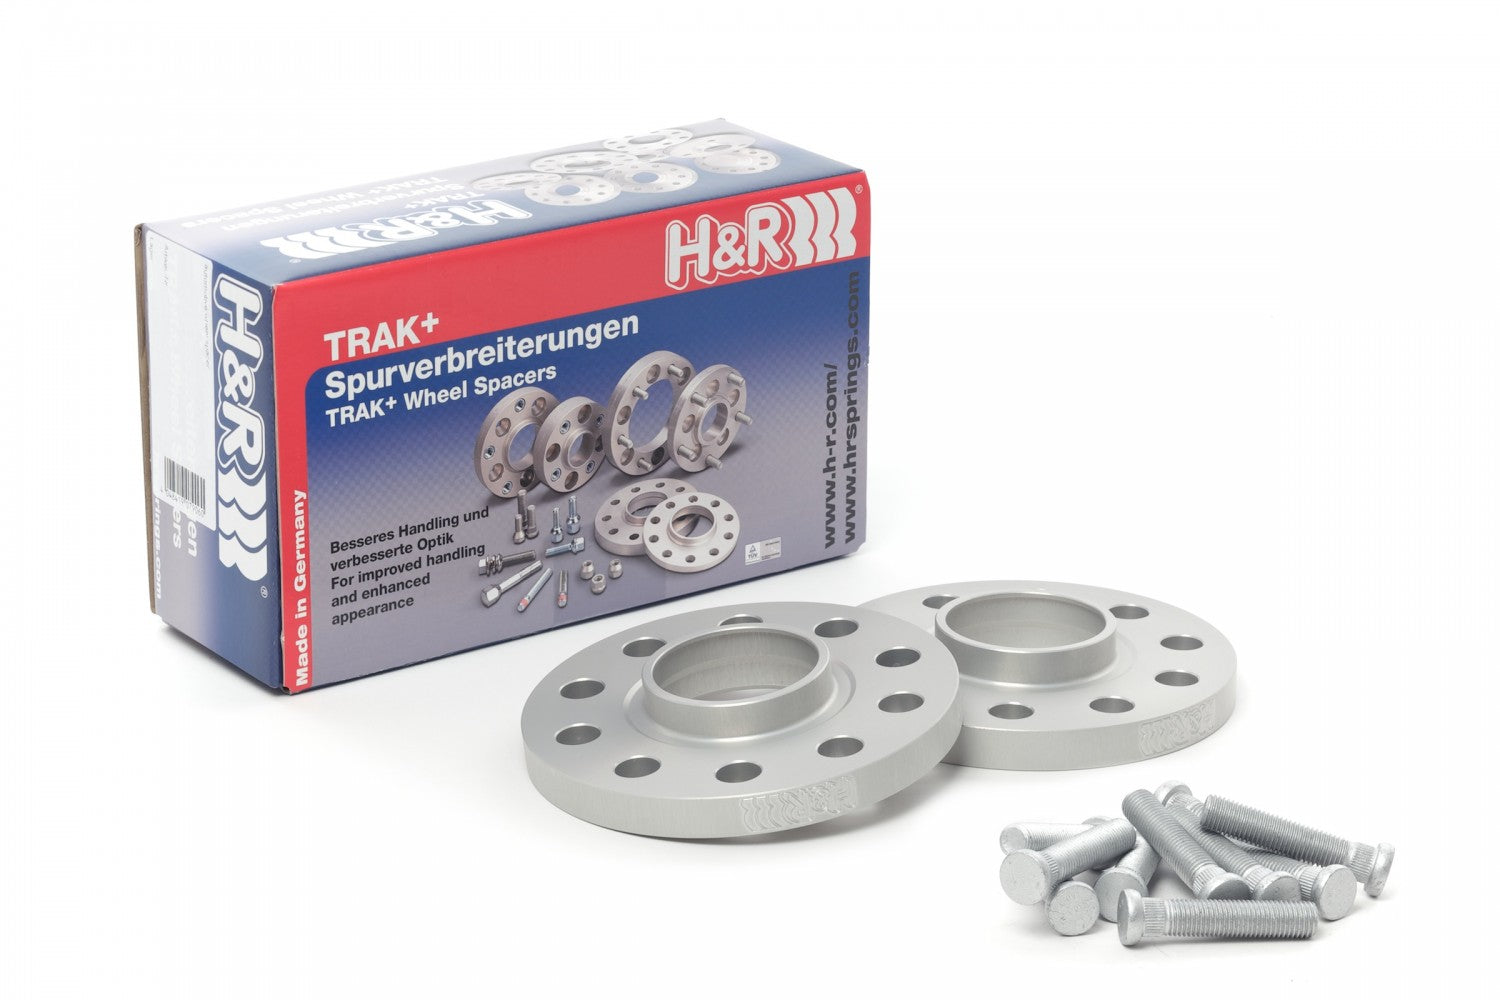 H&R DRS Trak+ Wheel Spacers Pair 5x100 5mm Center Bore 56mm Thread